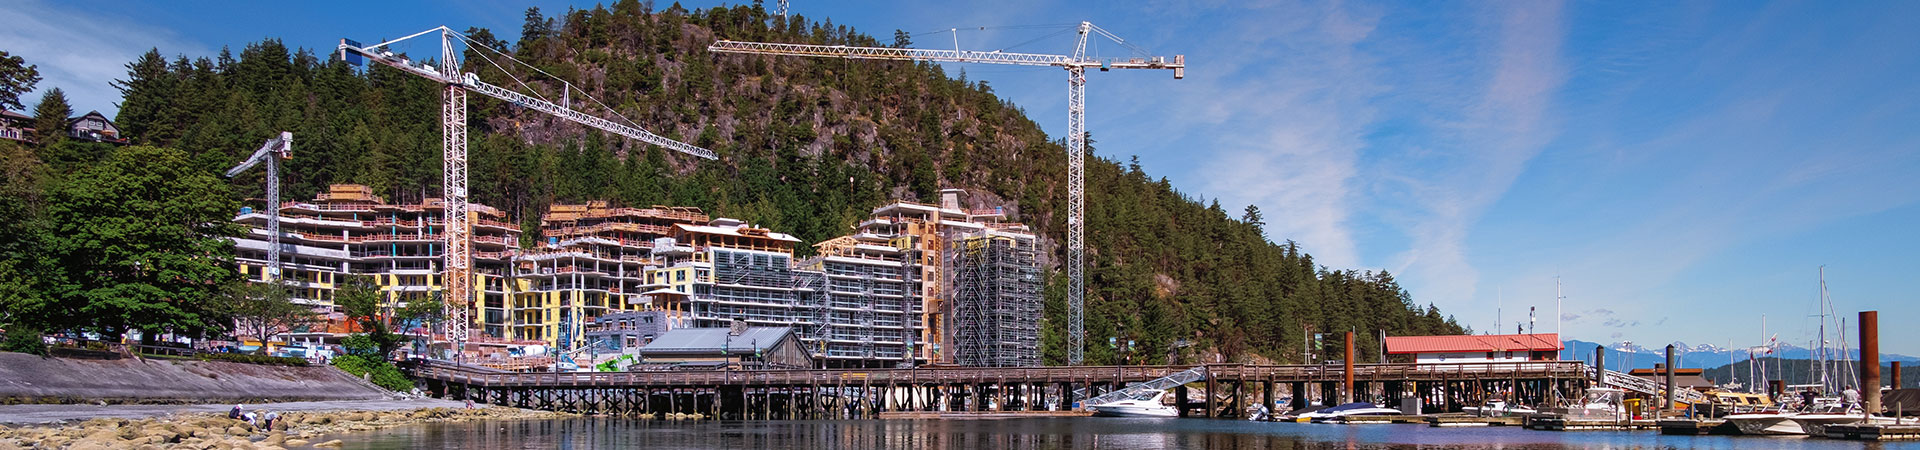 BC Crane Safety Association - tower cranes at waterfront